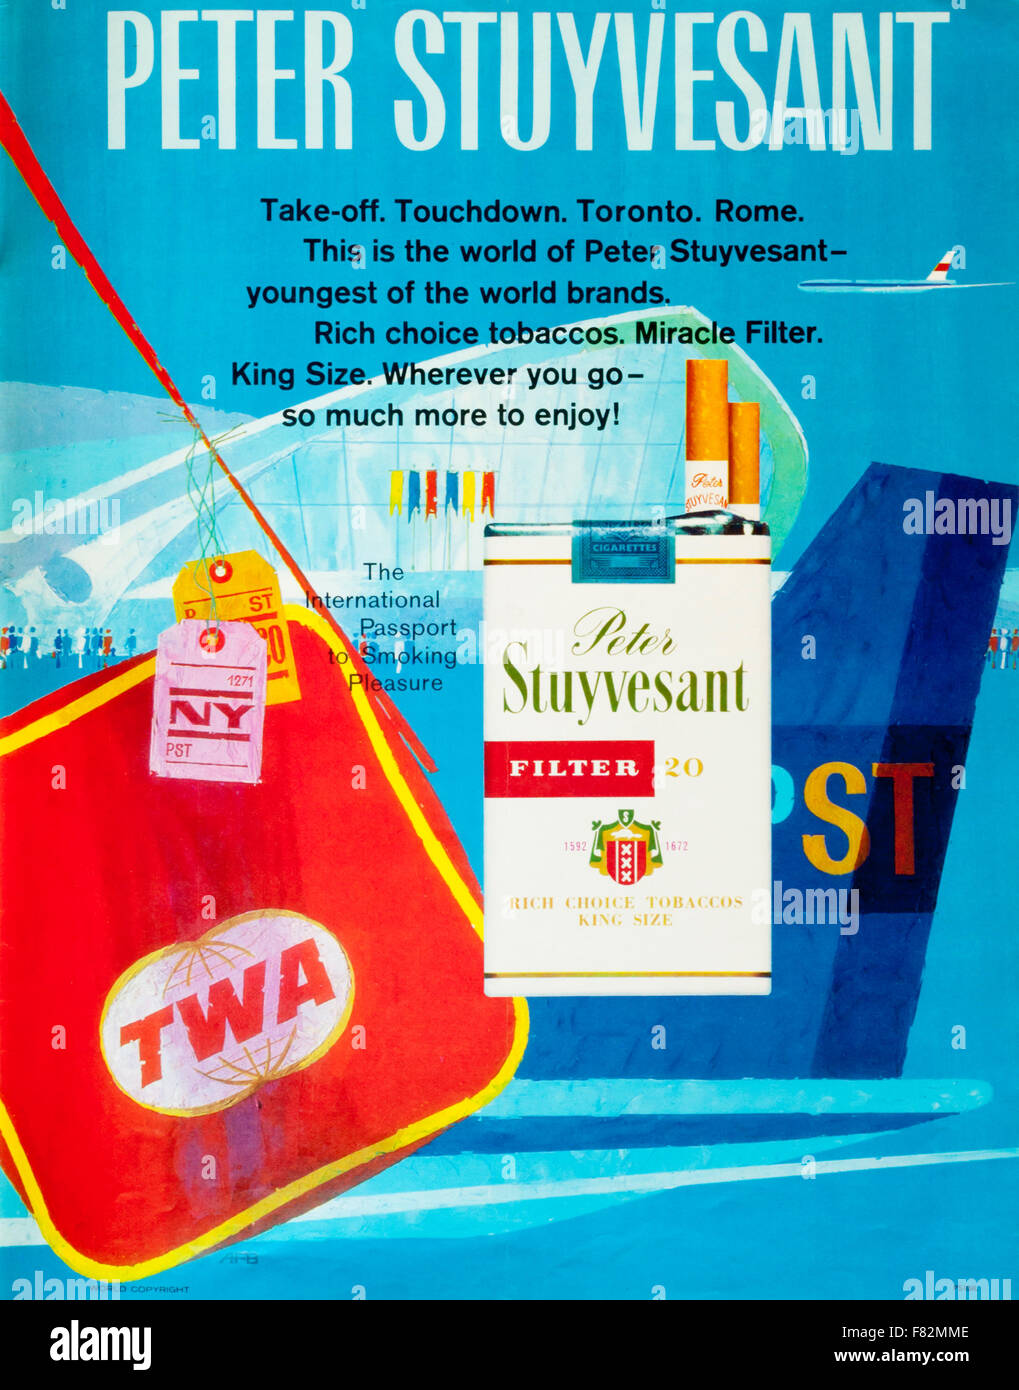 1960s magazine advertisement advertising Peter Stuyvesant cigarettes. Stock Photo